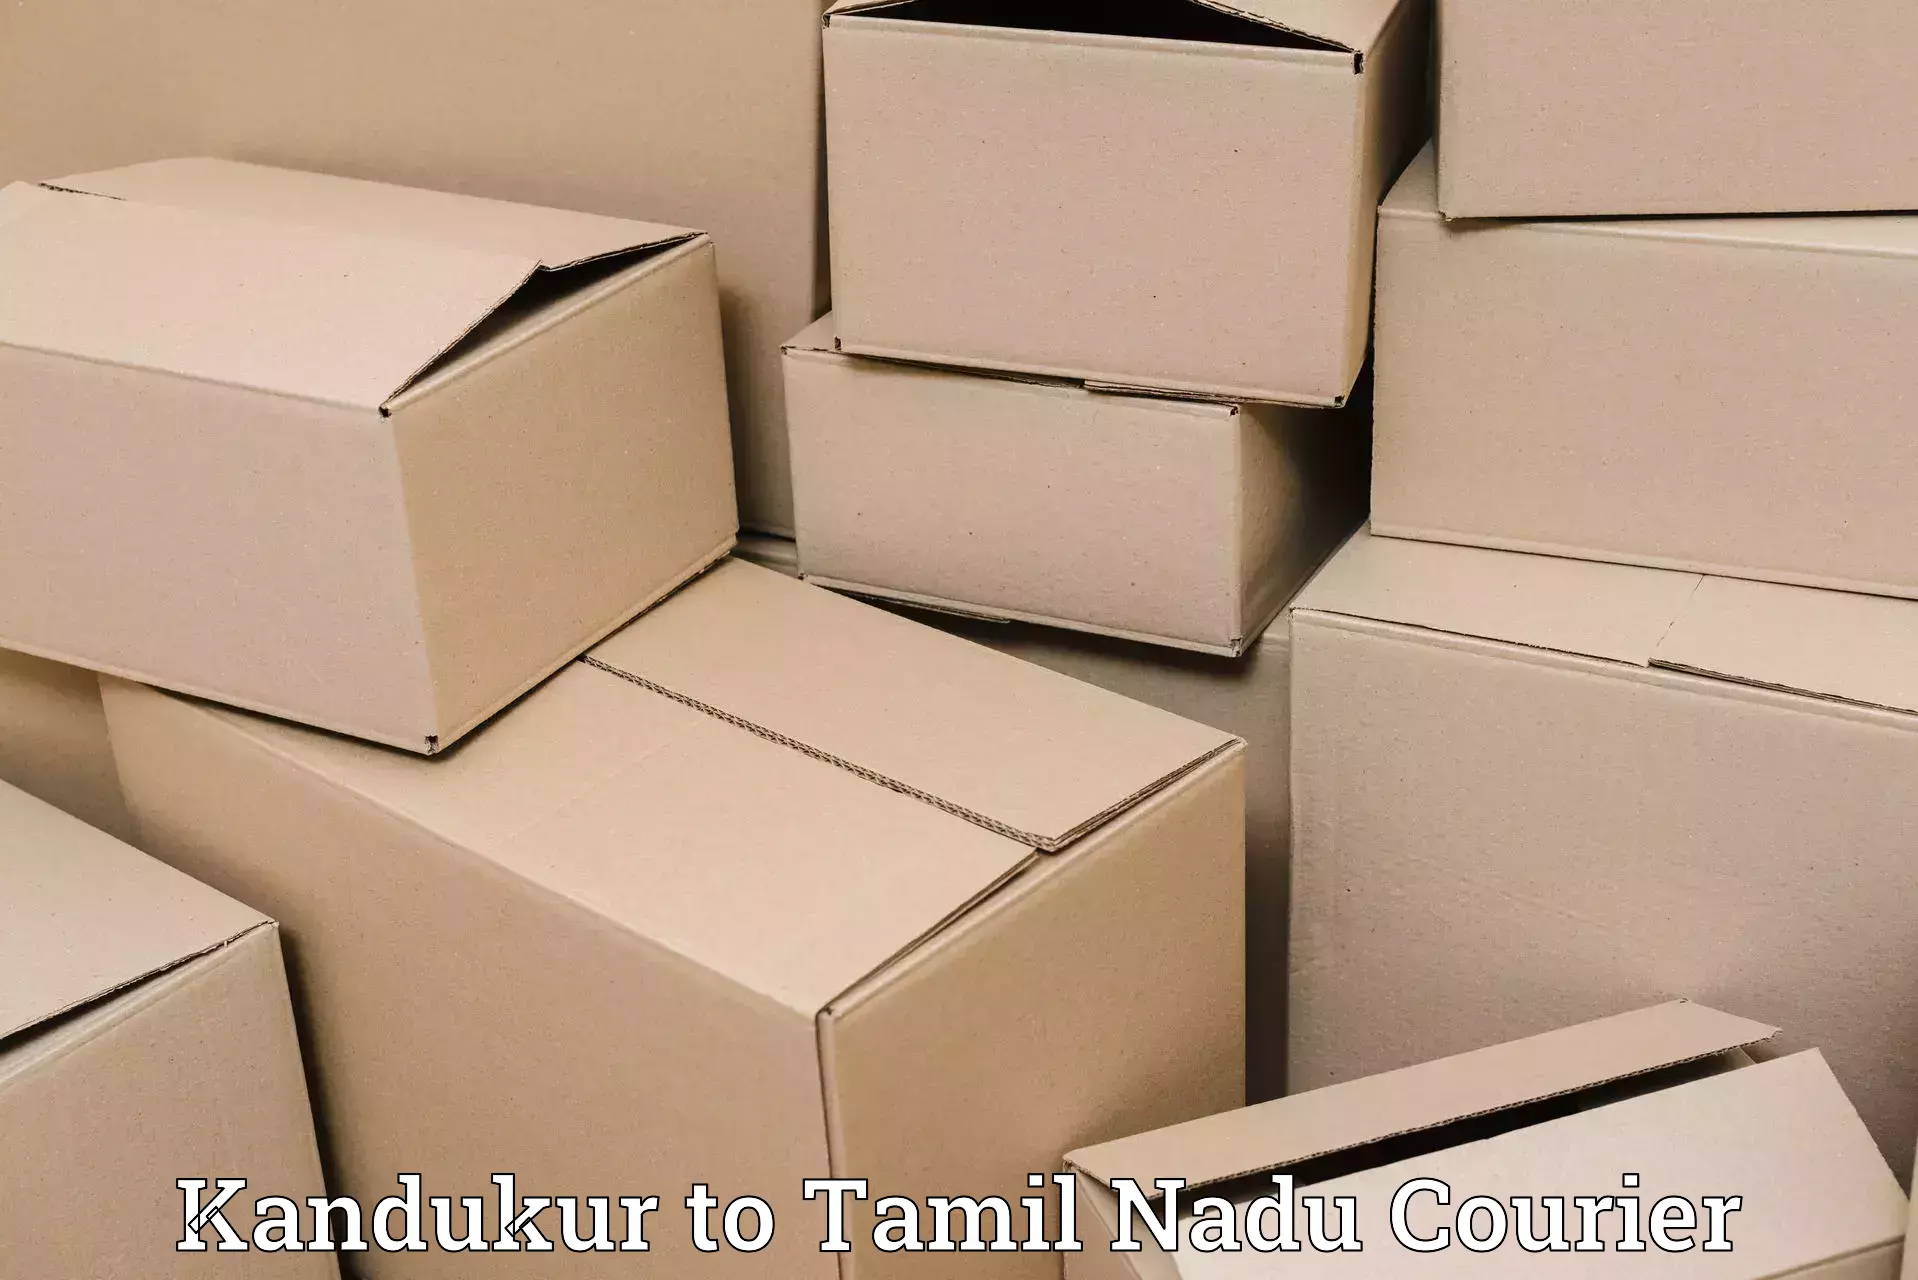 Courier service booking Kandukur to Chennai Port